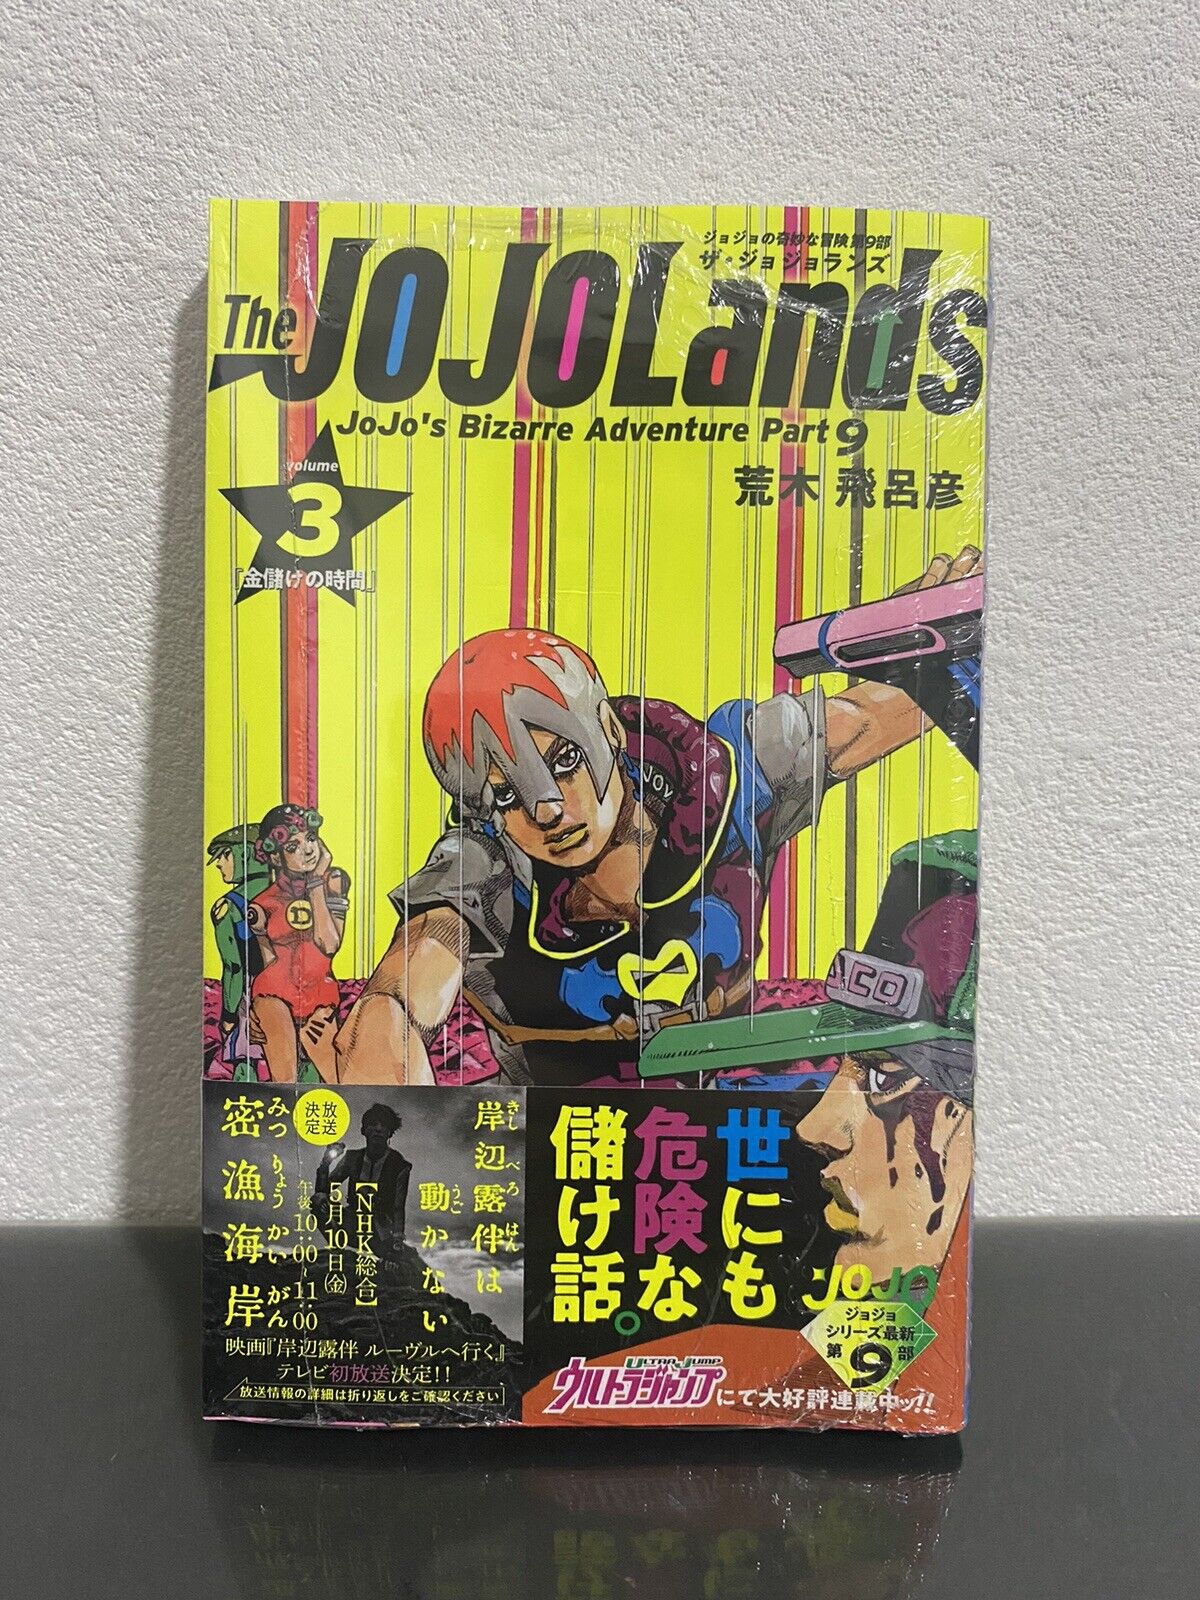 The JOJOLands Volume 3 Vol.3 JOJO’s Bizarre Adventure Part 9 JUMP Comic Japanese